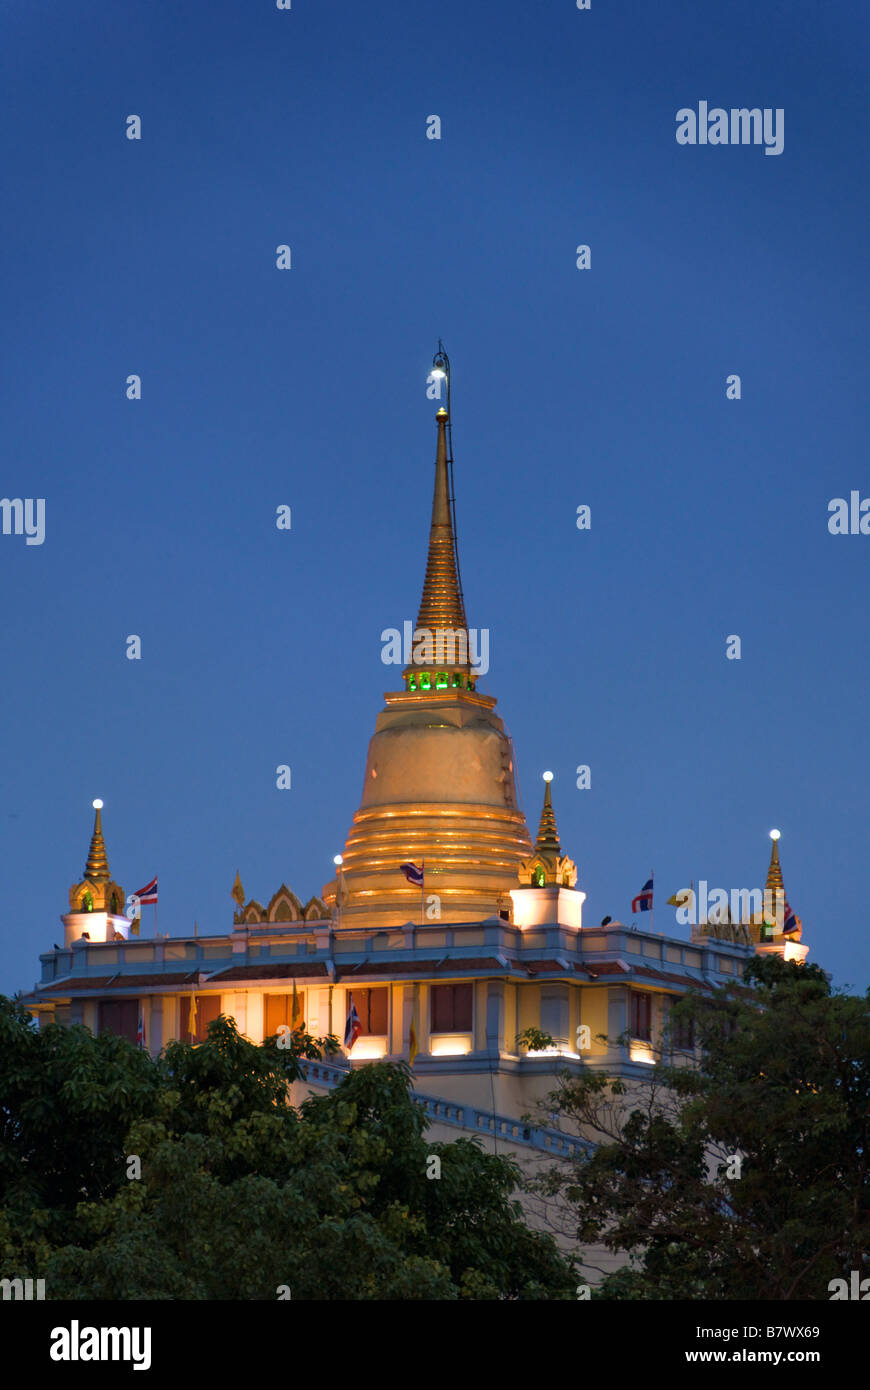 Wat Saket Buddhistentempel auf Golden Mount Phra Nakorn Bezirk in Bangkok Zentralthailand Stockfoto